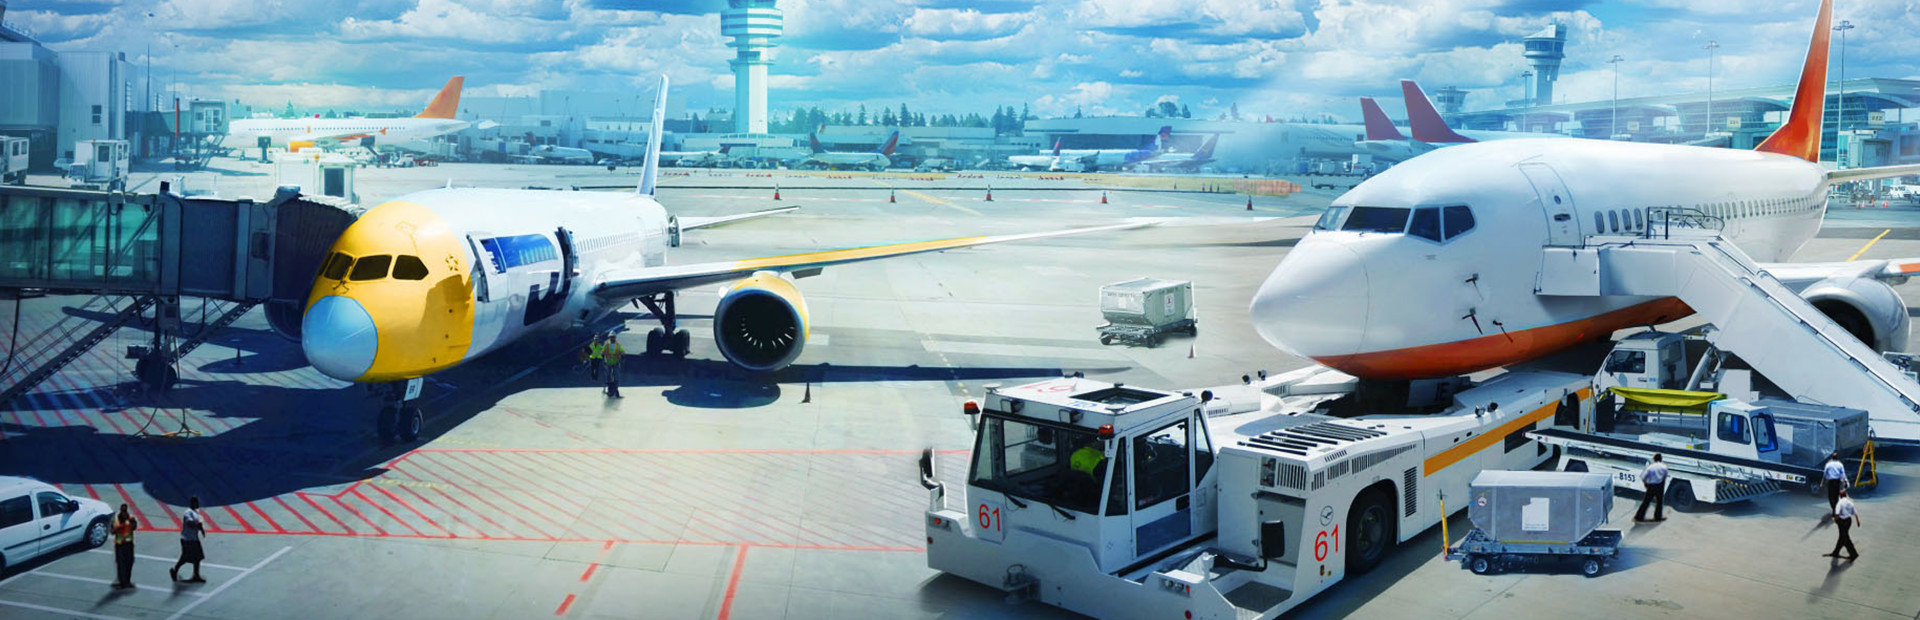 Airport Simulator 2019 cover image